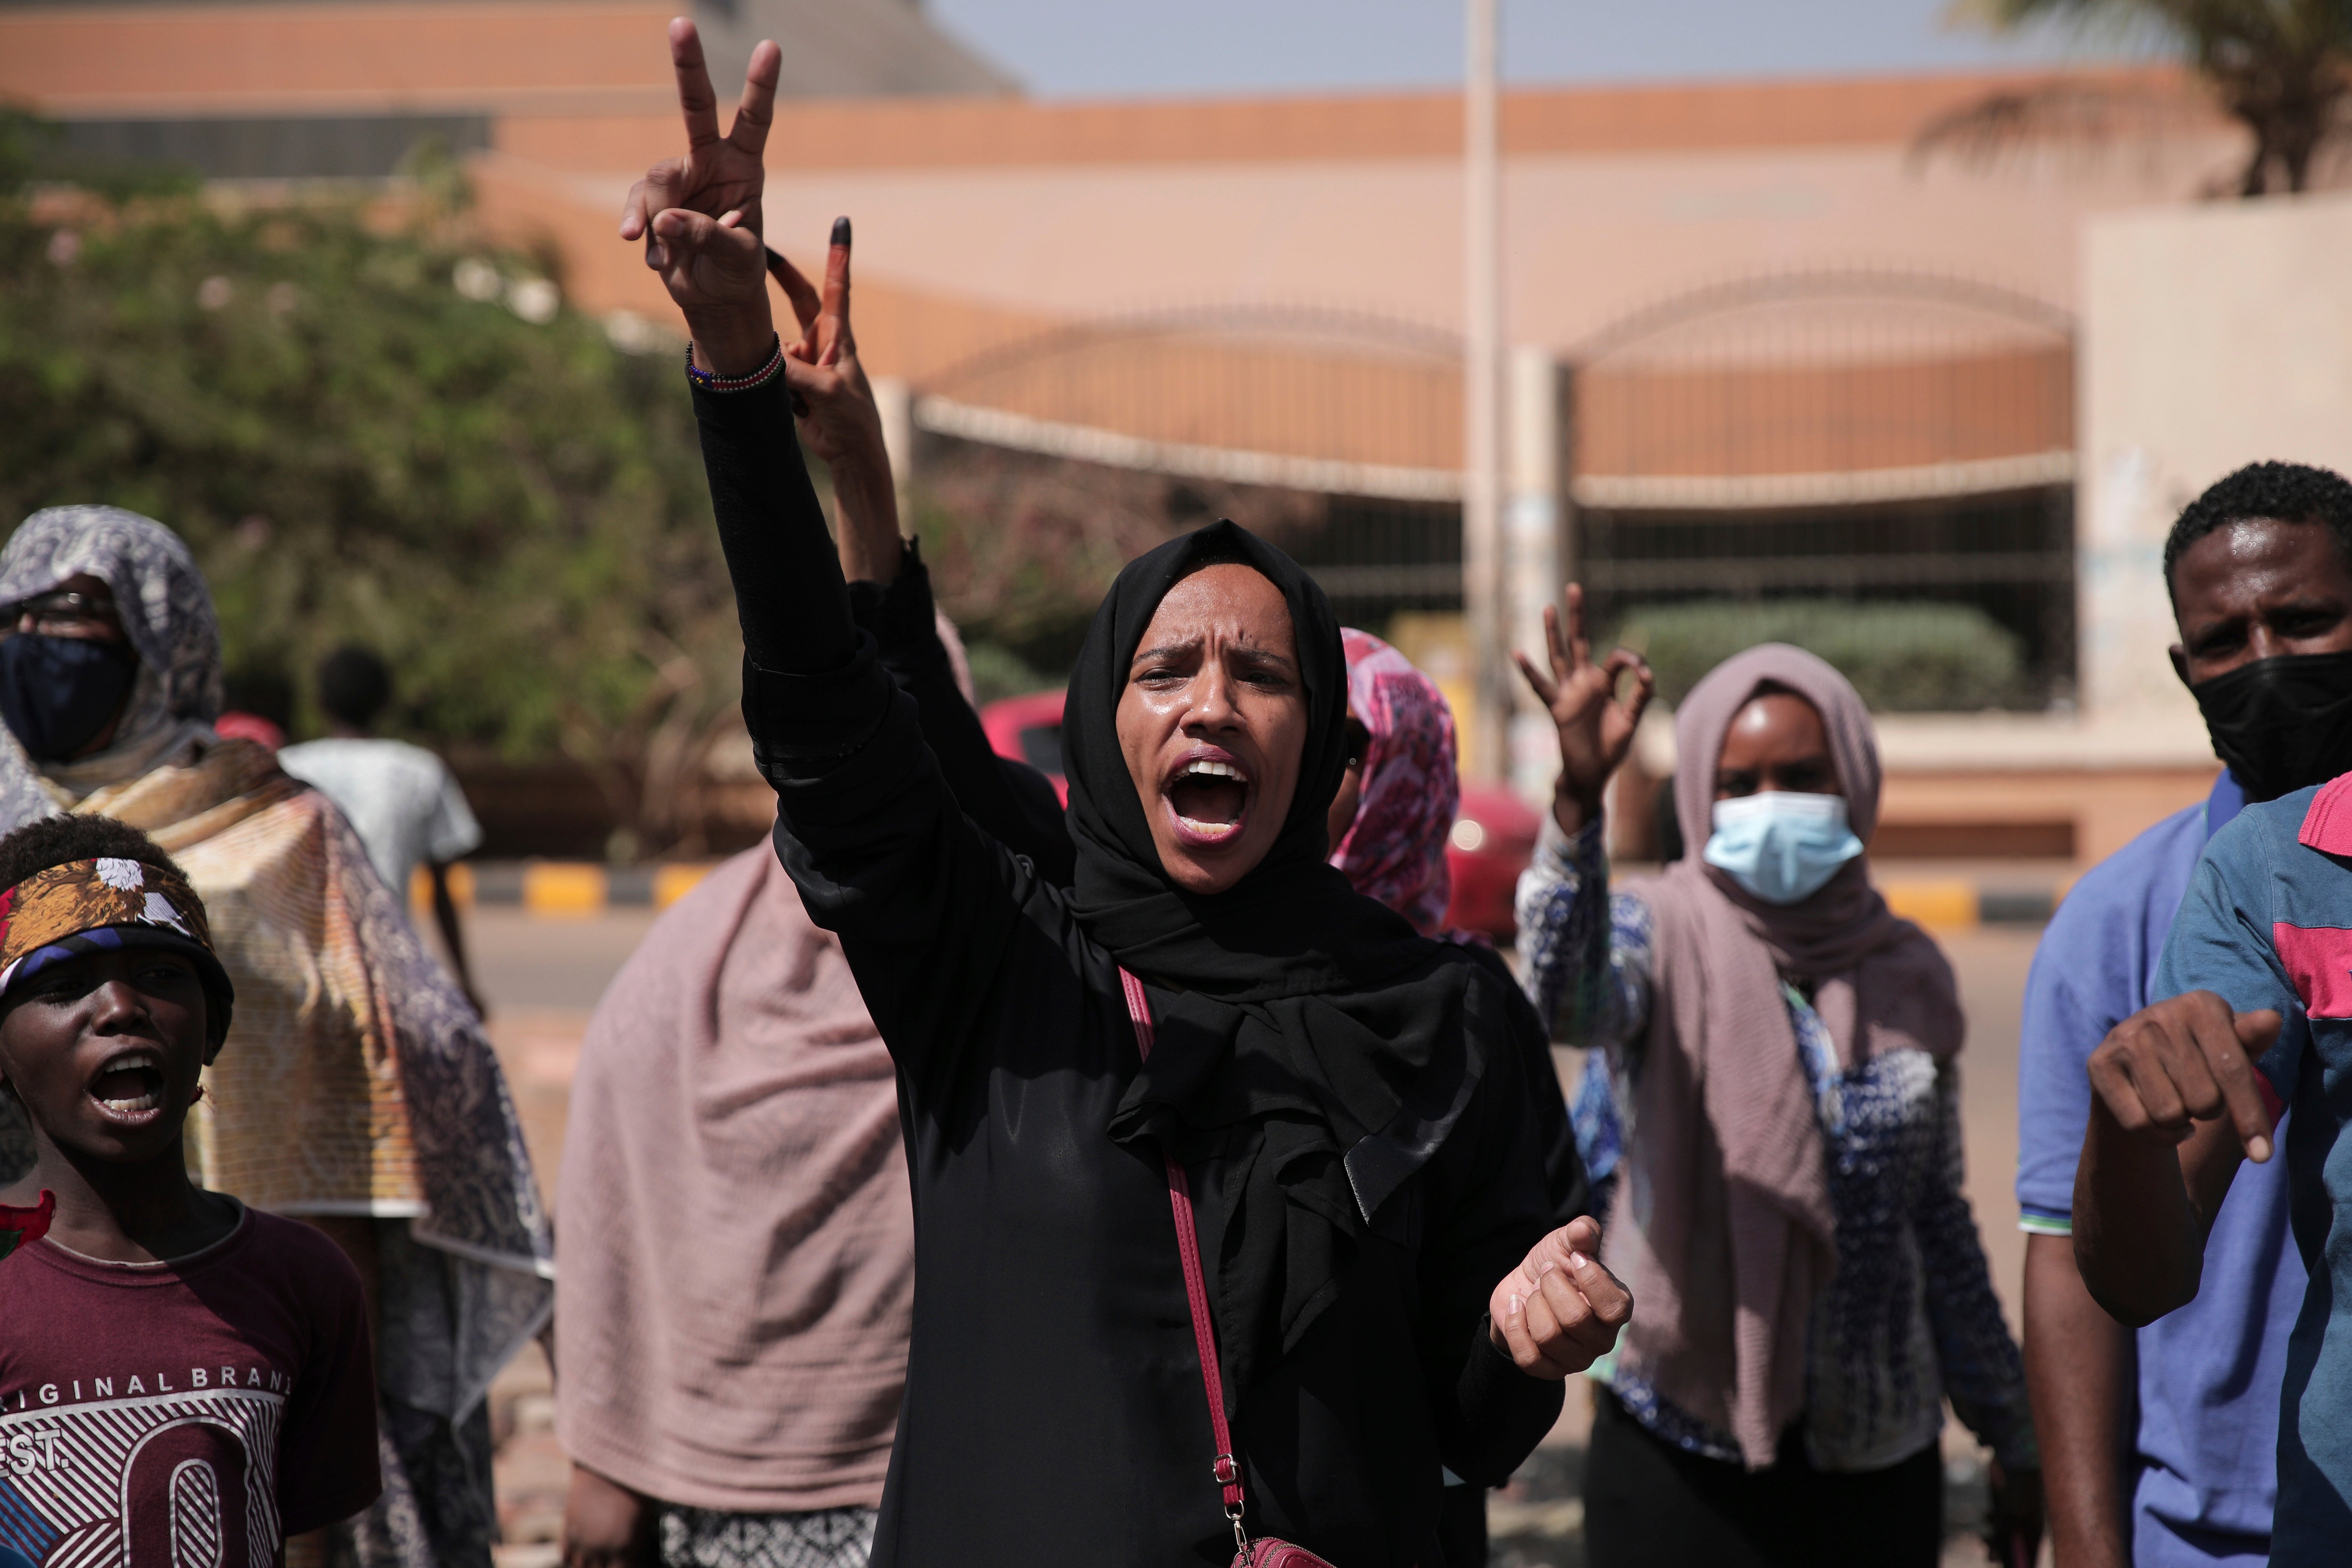 A woman chants slogans during a protest in Khartoum, Sudan